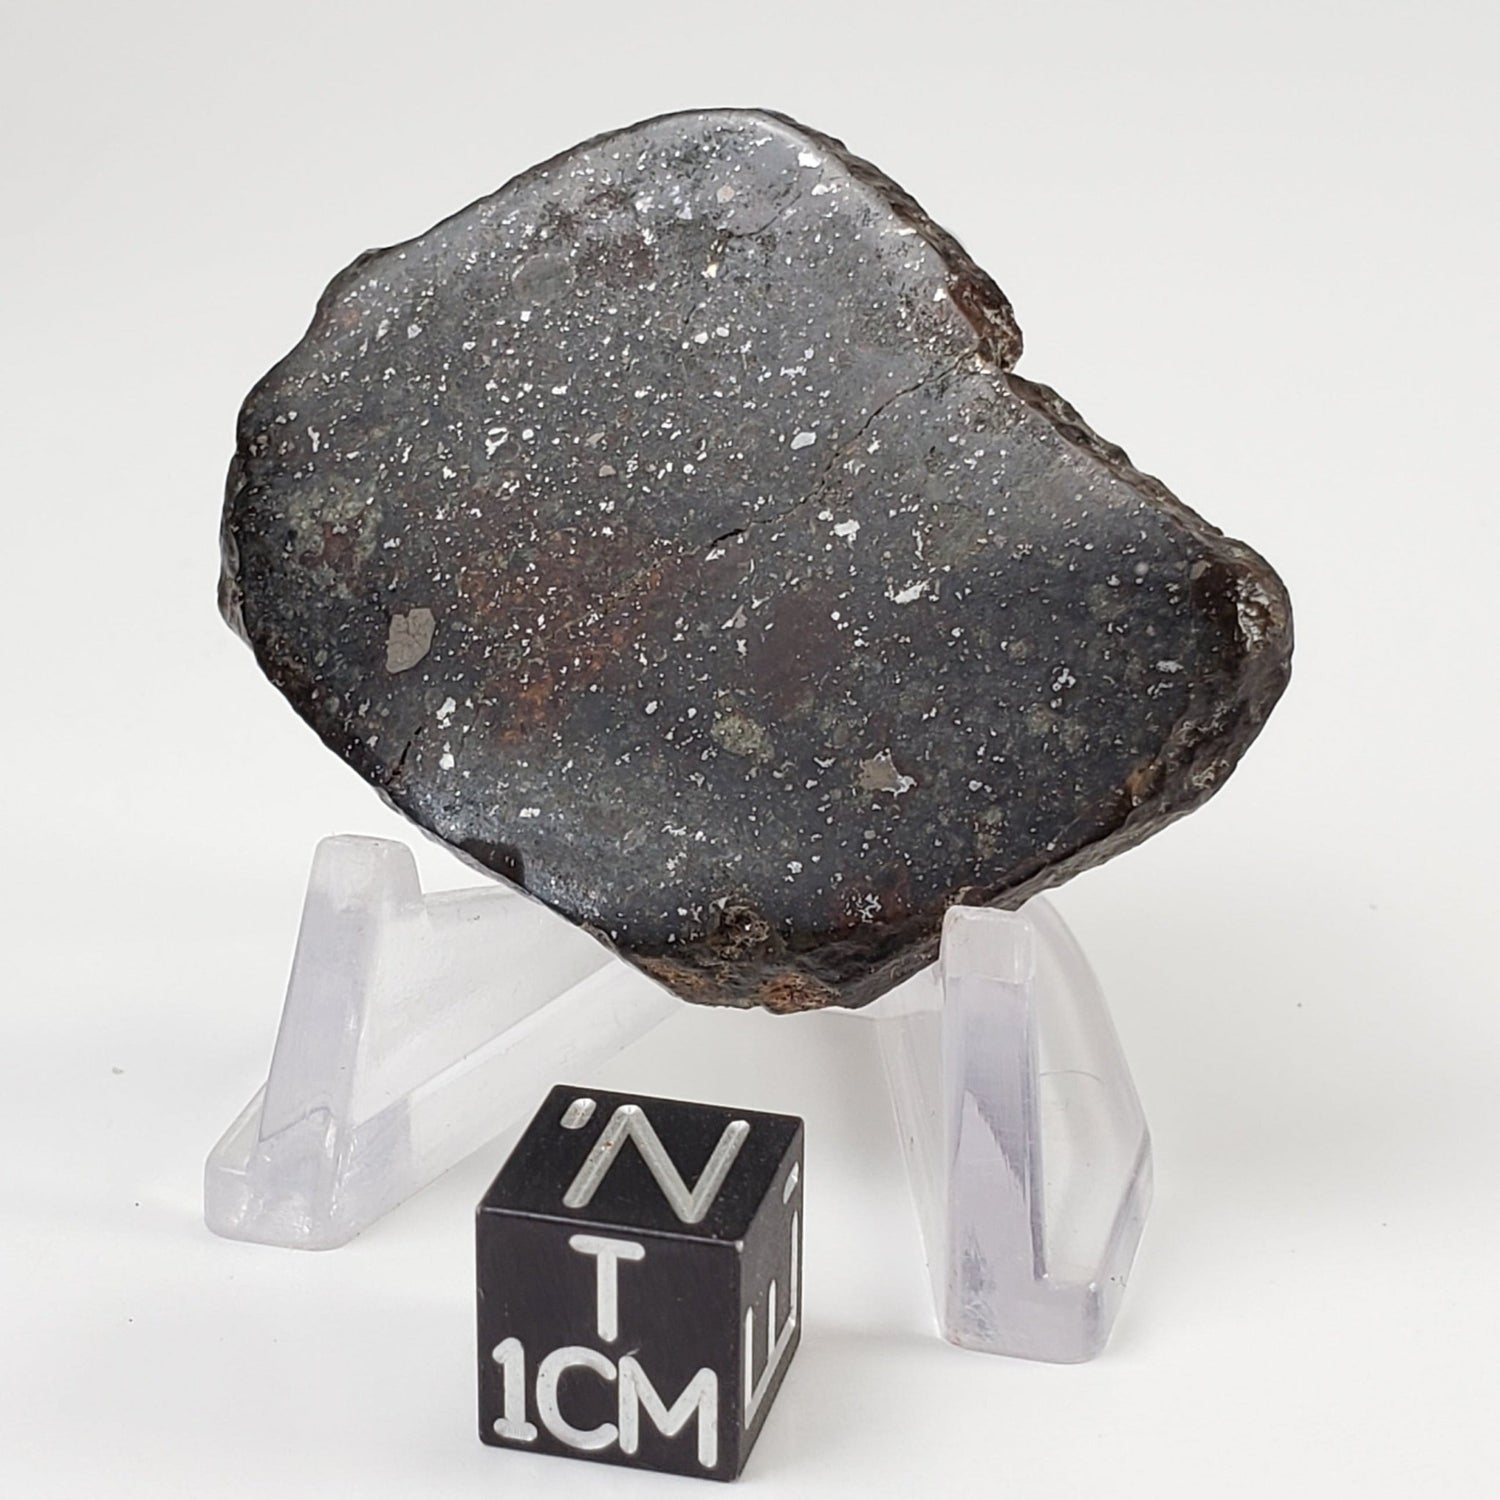 Sahara 02500 Meteorite | 17.54 Gr | Slice | L3 Chondrite | Wadi Mellene, Algeria | Sahara Desert